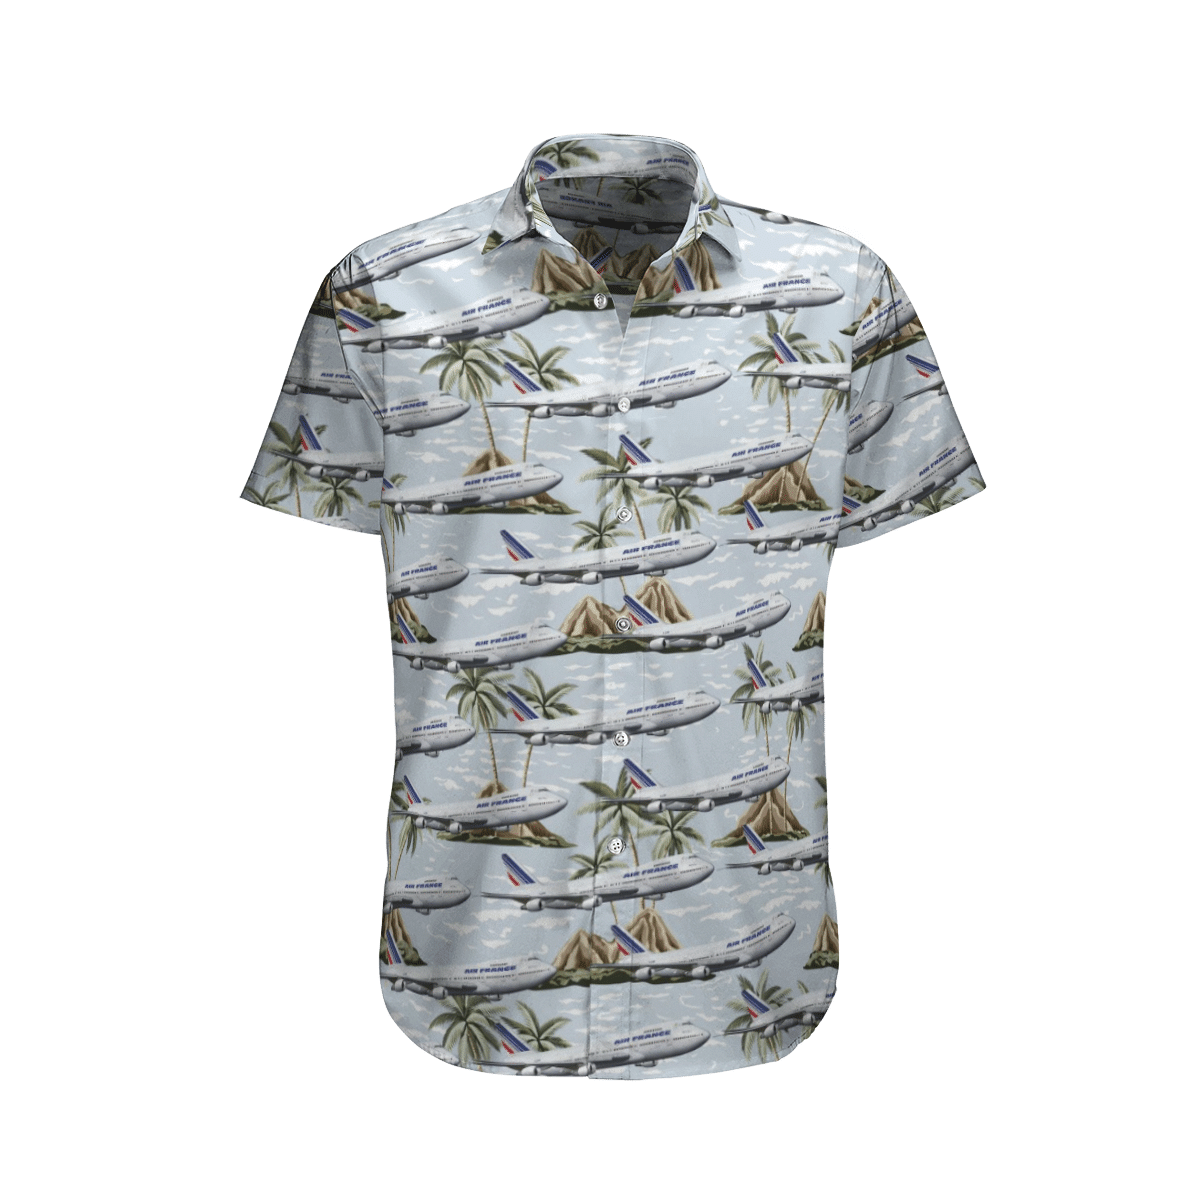 Get a new Hawaiian shirt to enjoy summer vacation 108